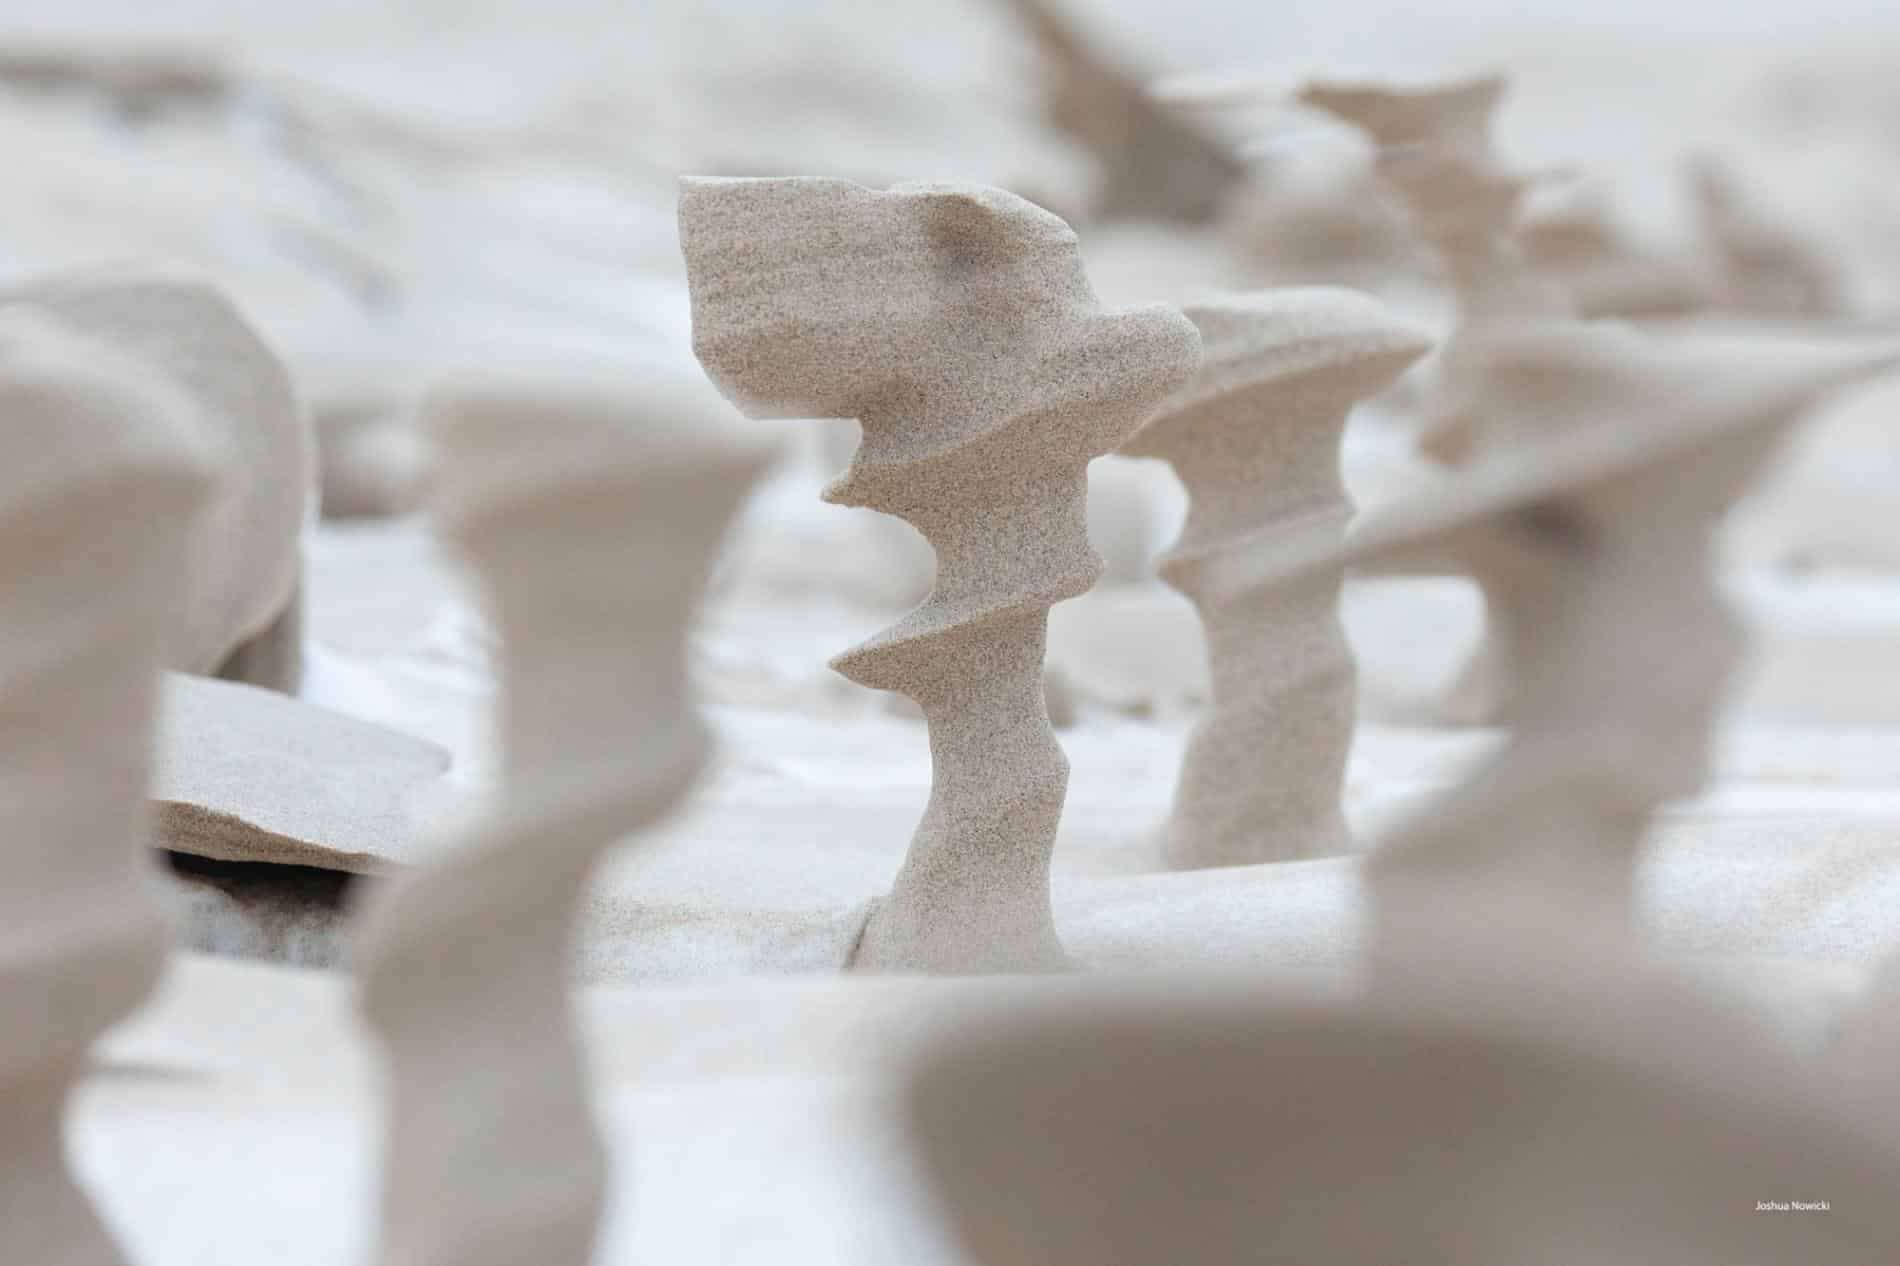 columnas de arena congelada son creadas por fuertes vientos y fotografiasdas por Joshua Nowicki